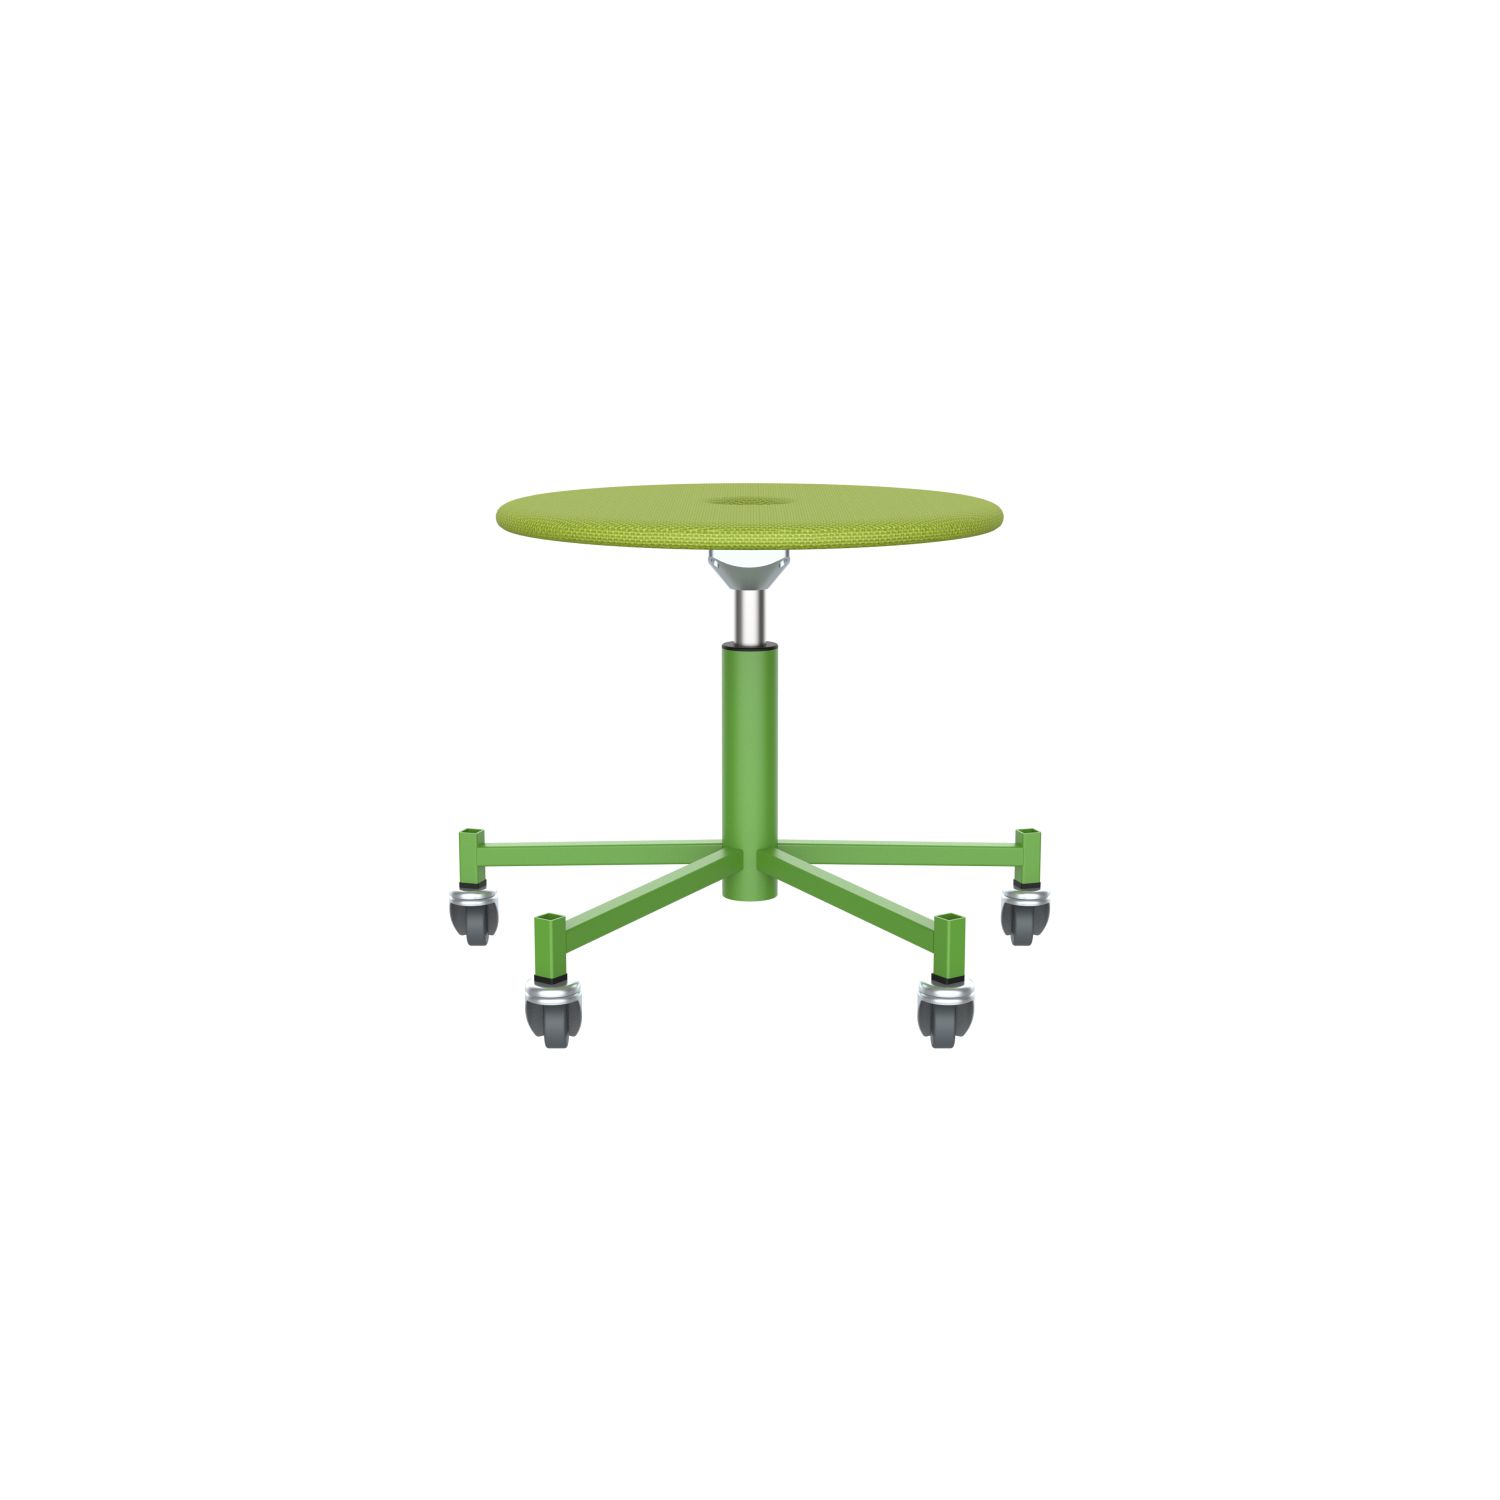 lensvelt piet hein eek mitw upholstered stool with wheels fairway green 020 yellow green ral6018 with wheels